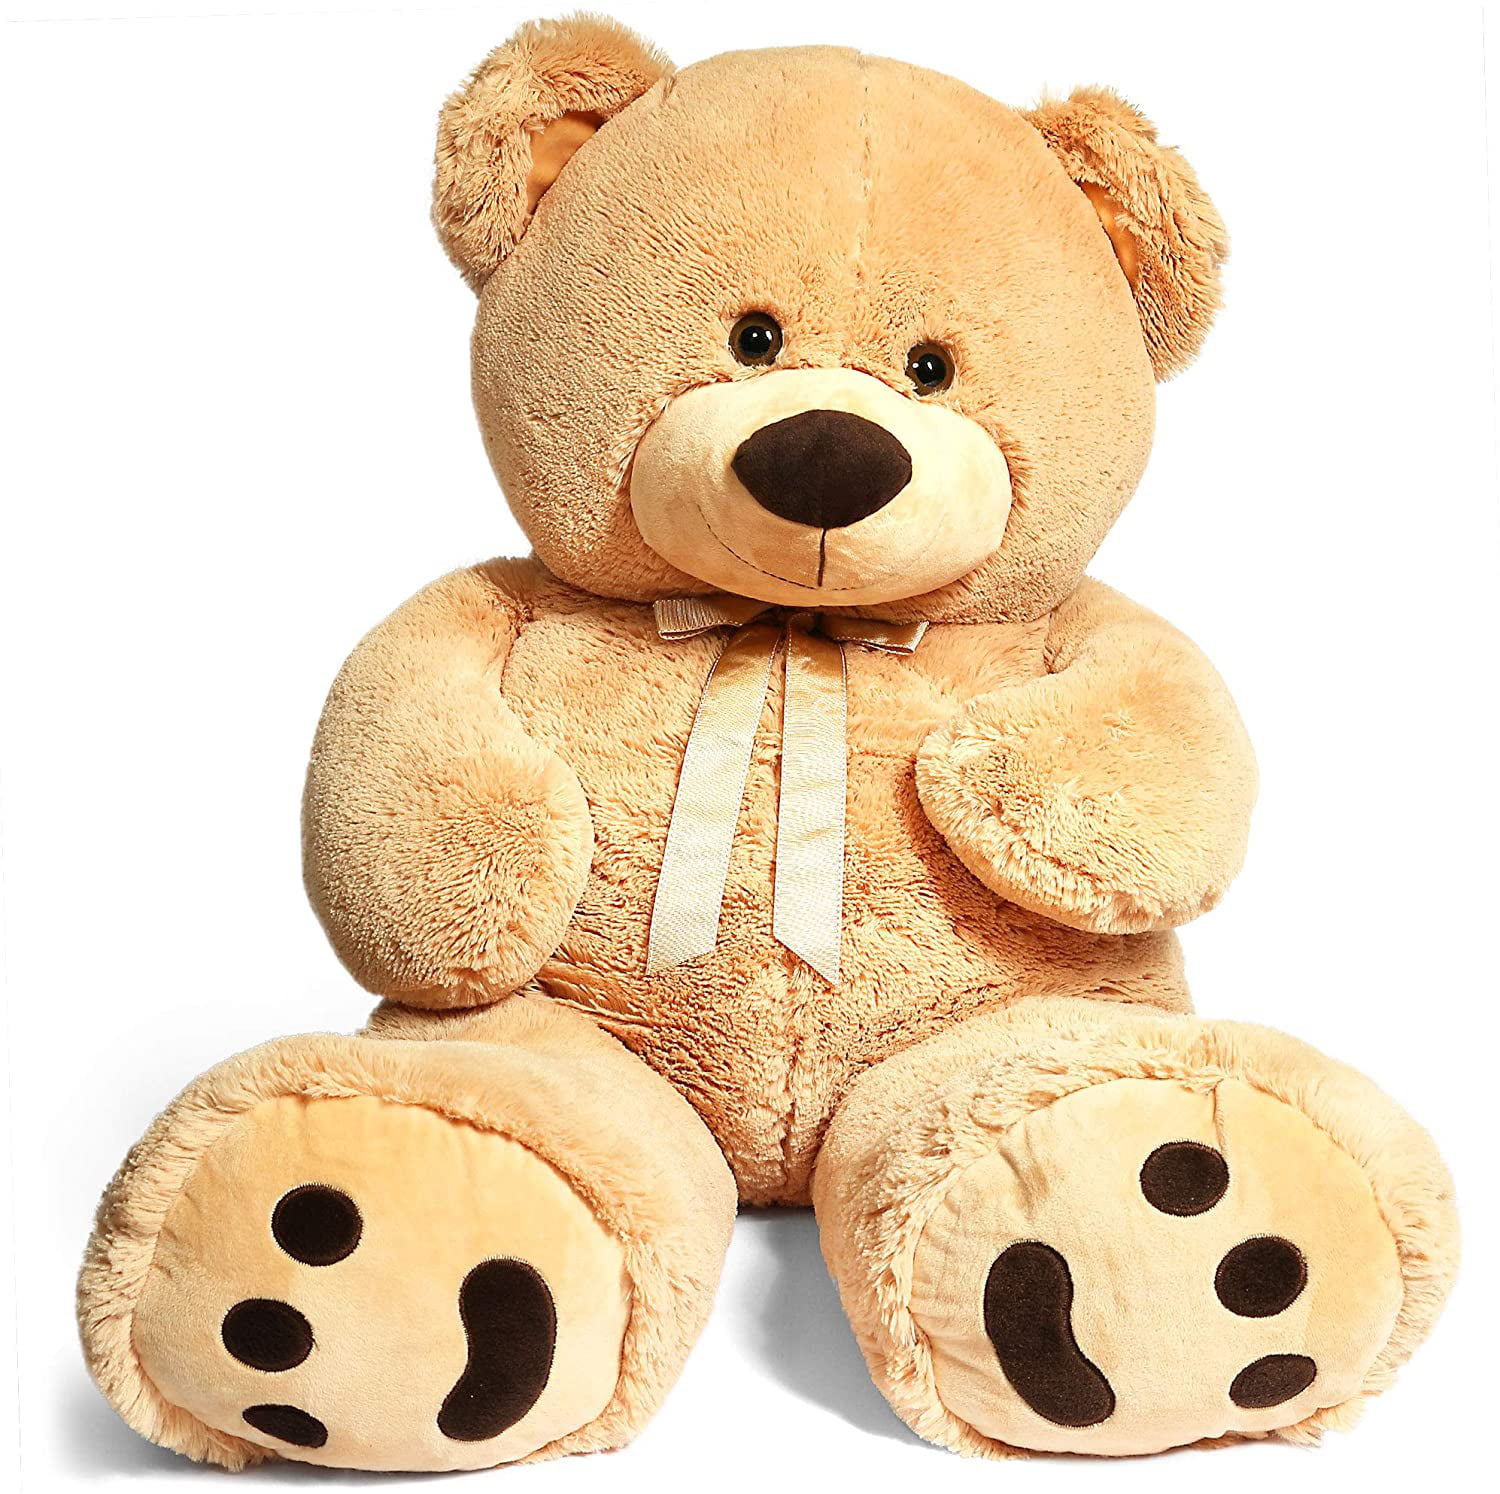 39" Giant Huge Big Teddy Bear Purple Stuffed Animals Plush Soft Toys Doll Gifts 